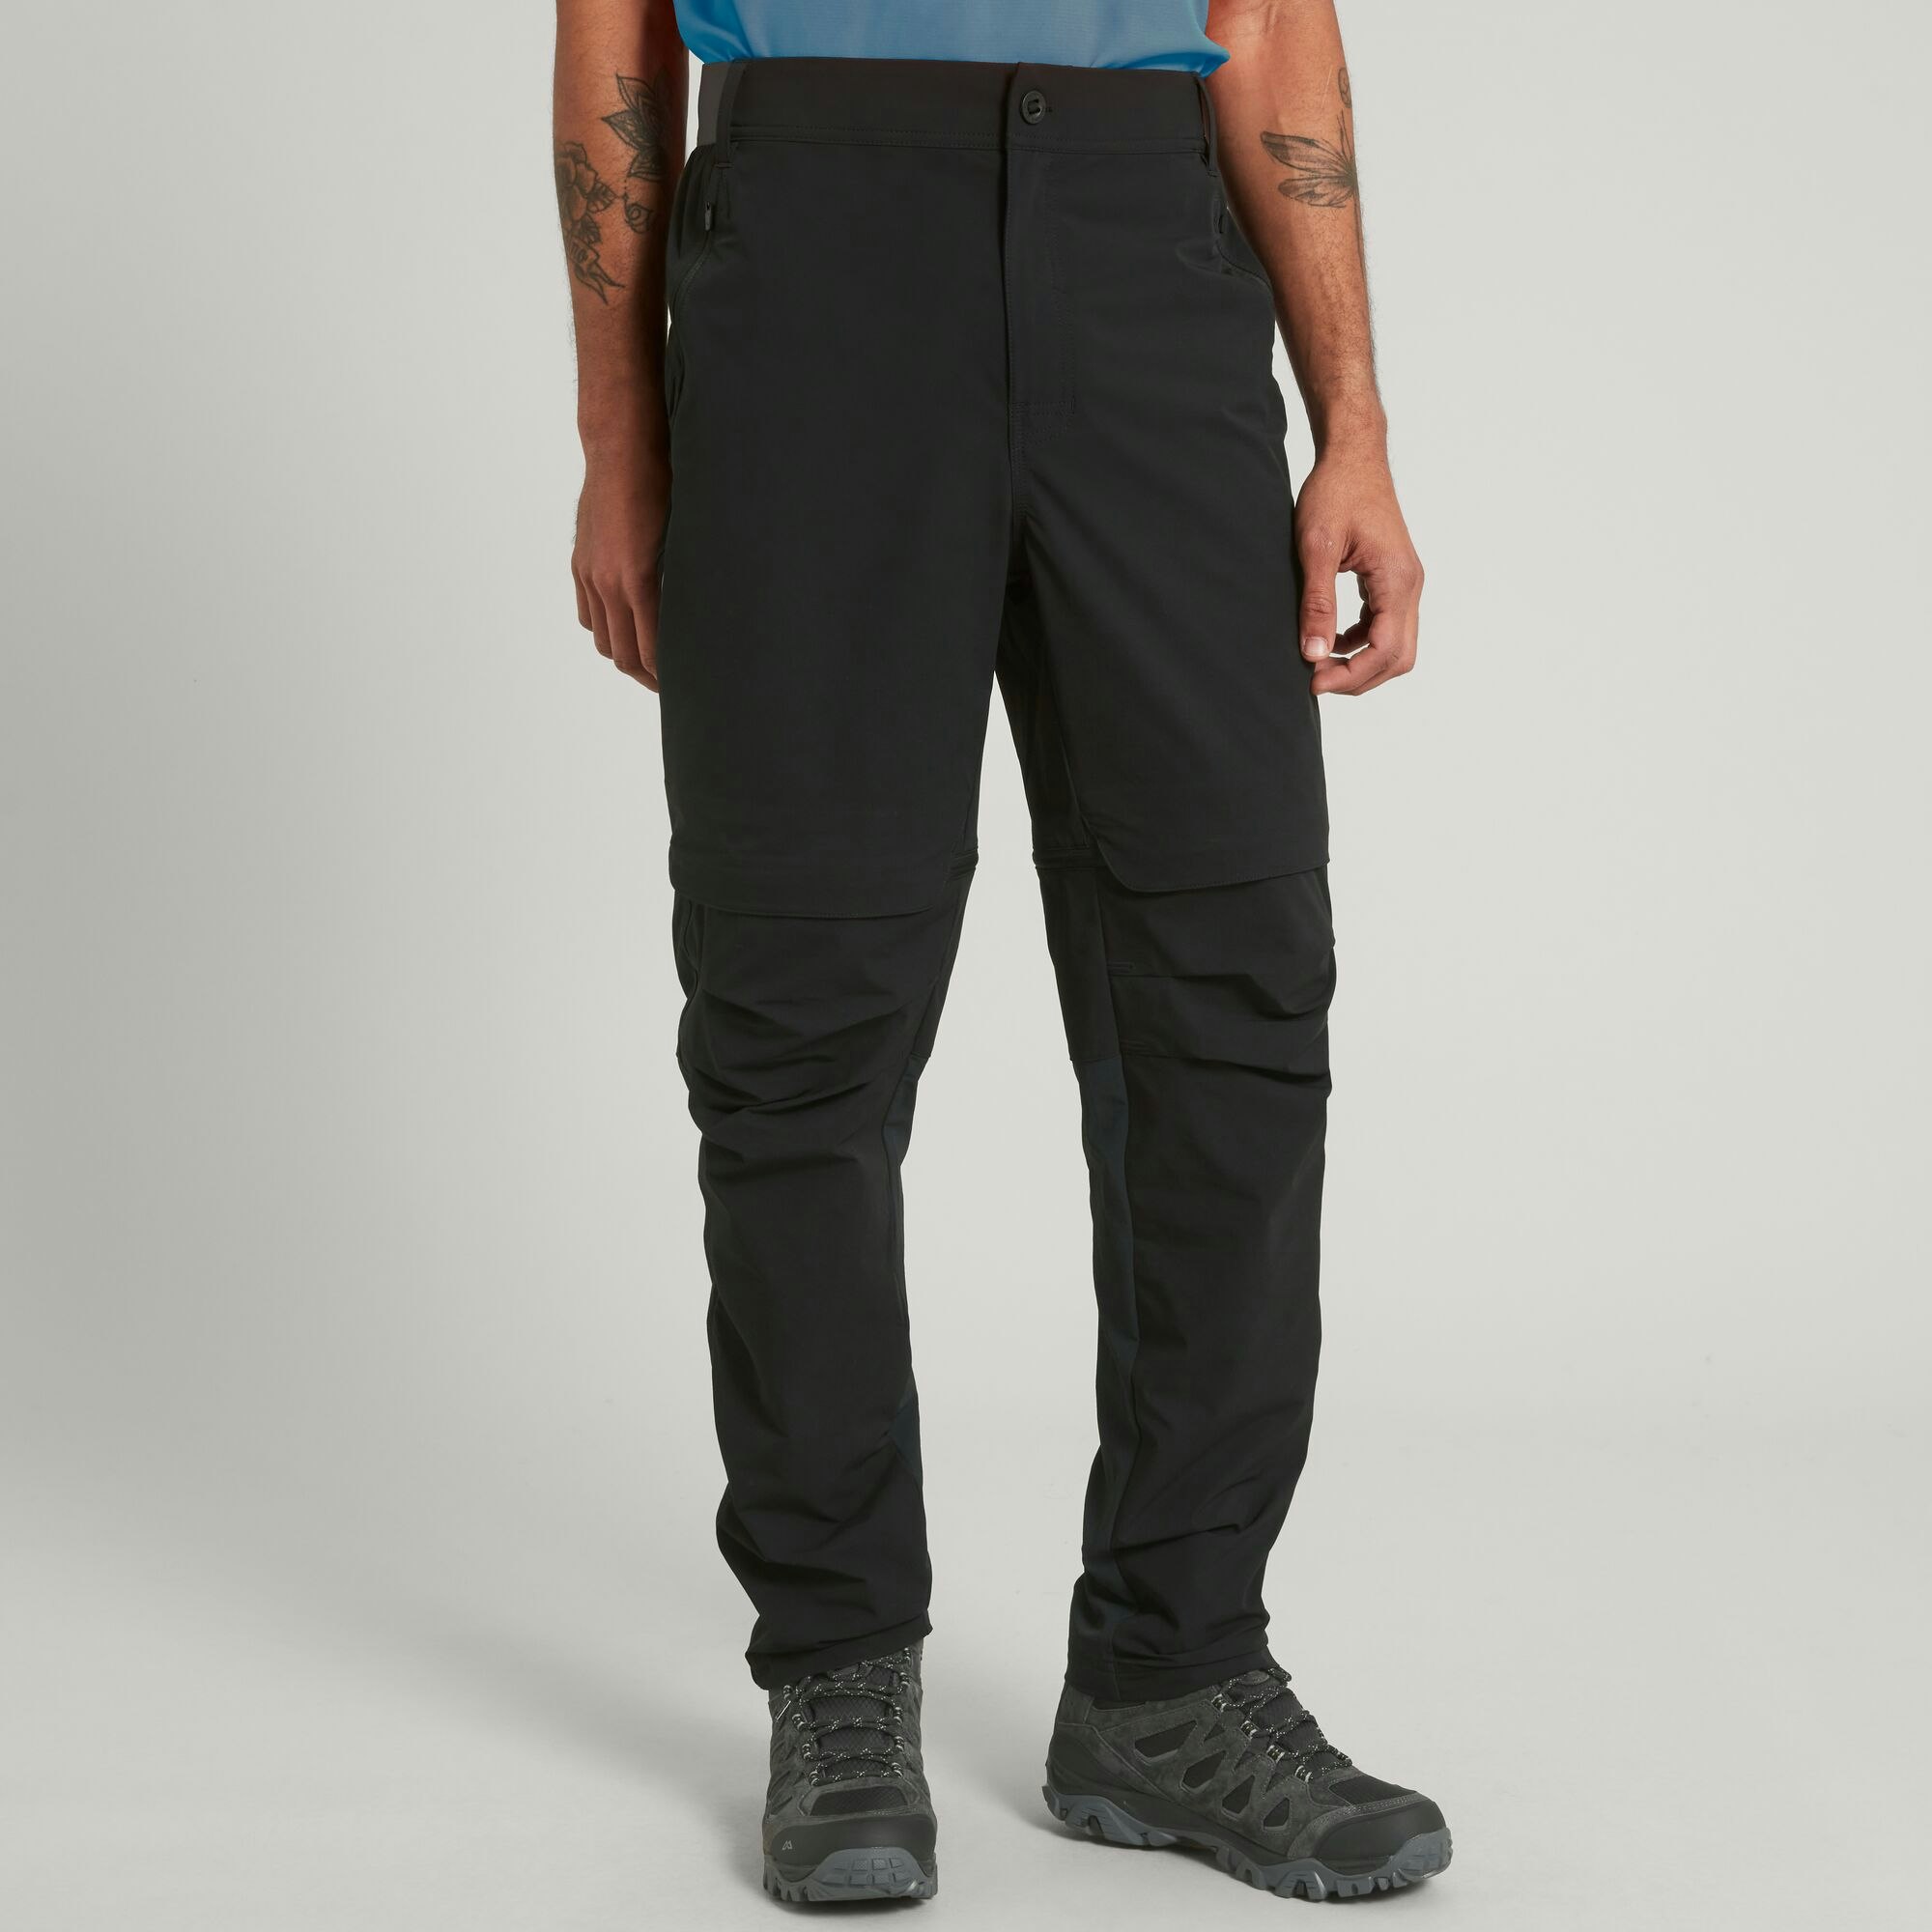 Pika Mens Ortler Convertible Trousers (Beige) | Sportpursuit.com